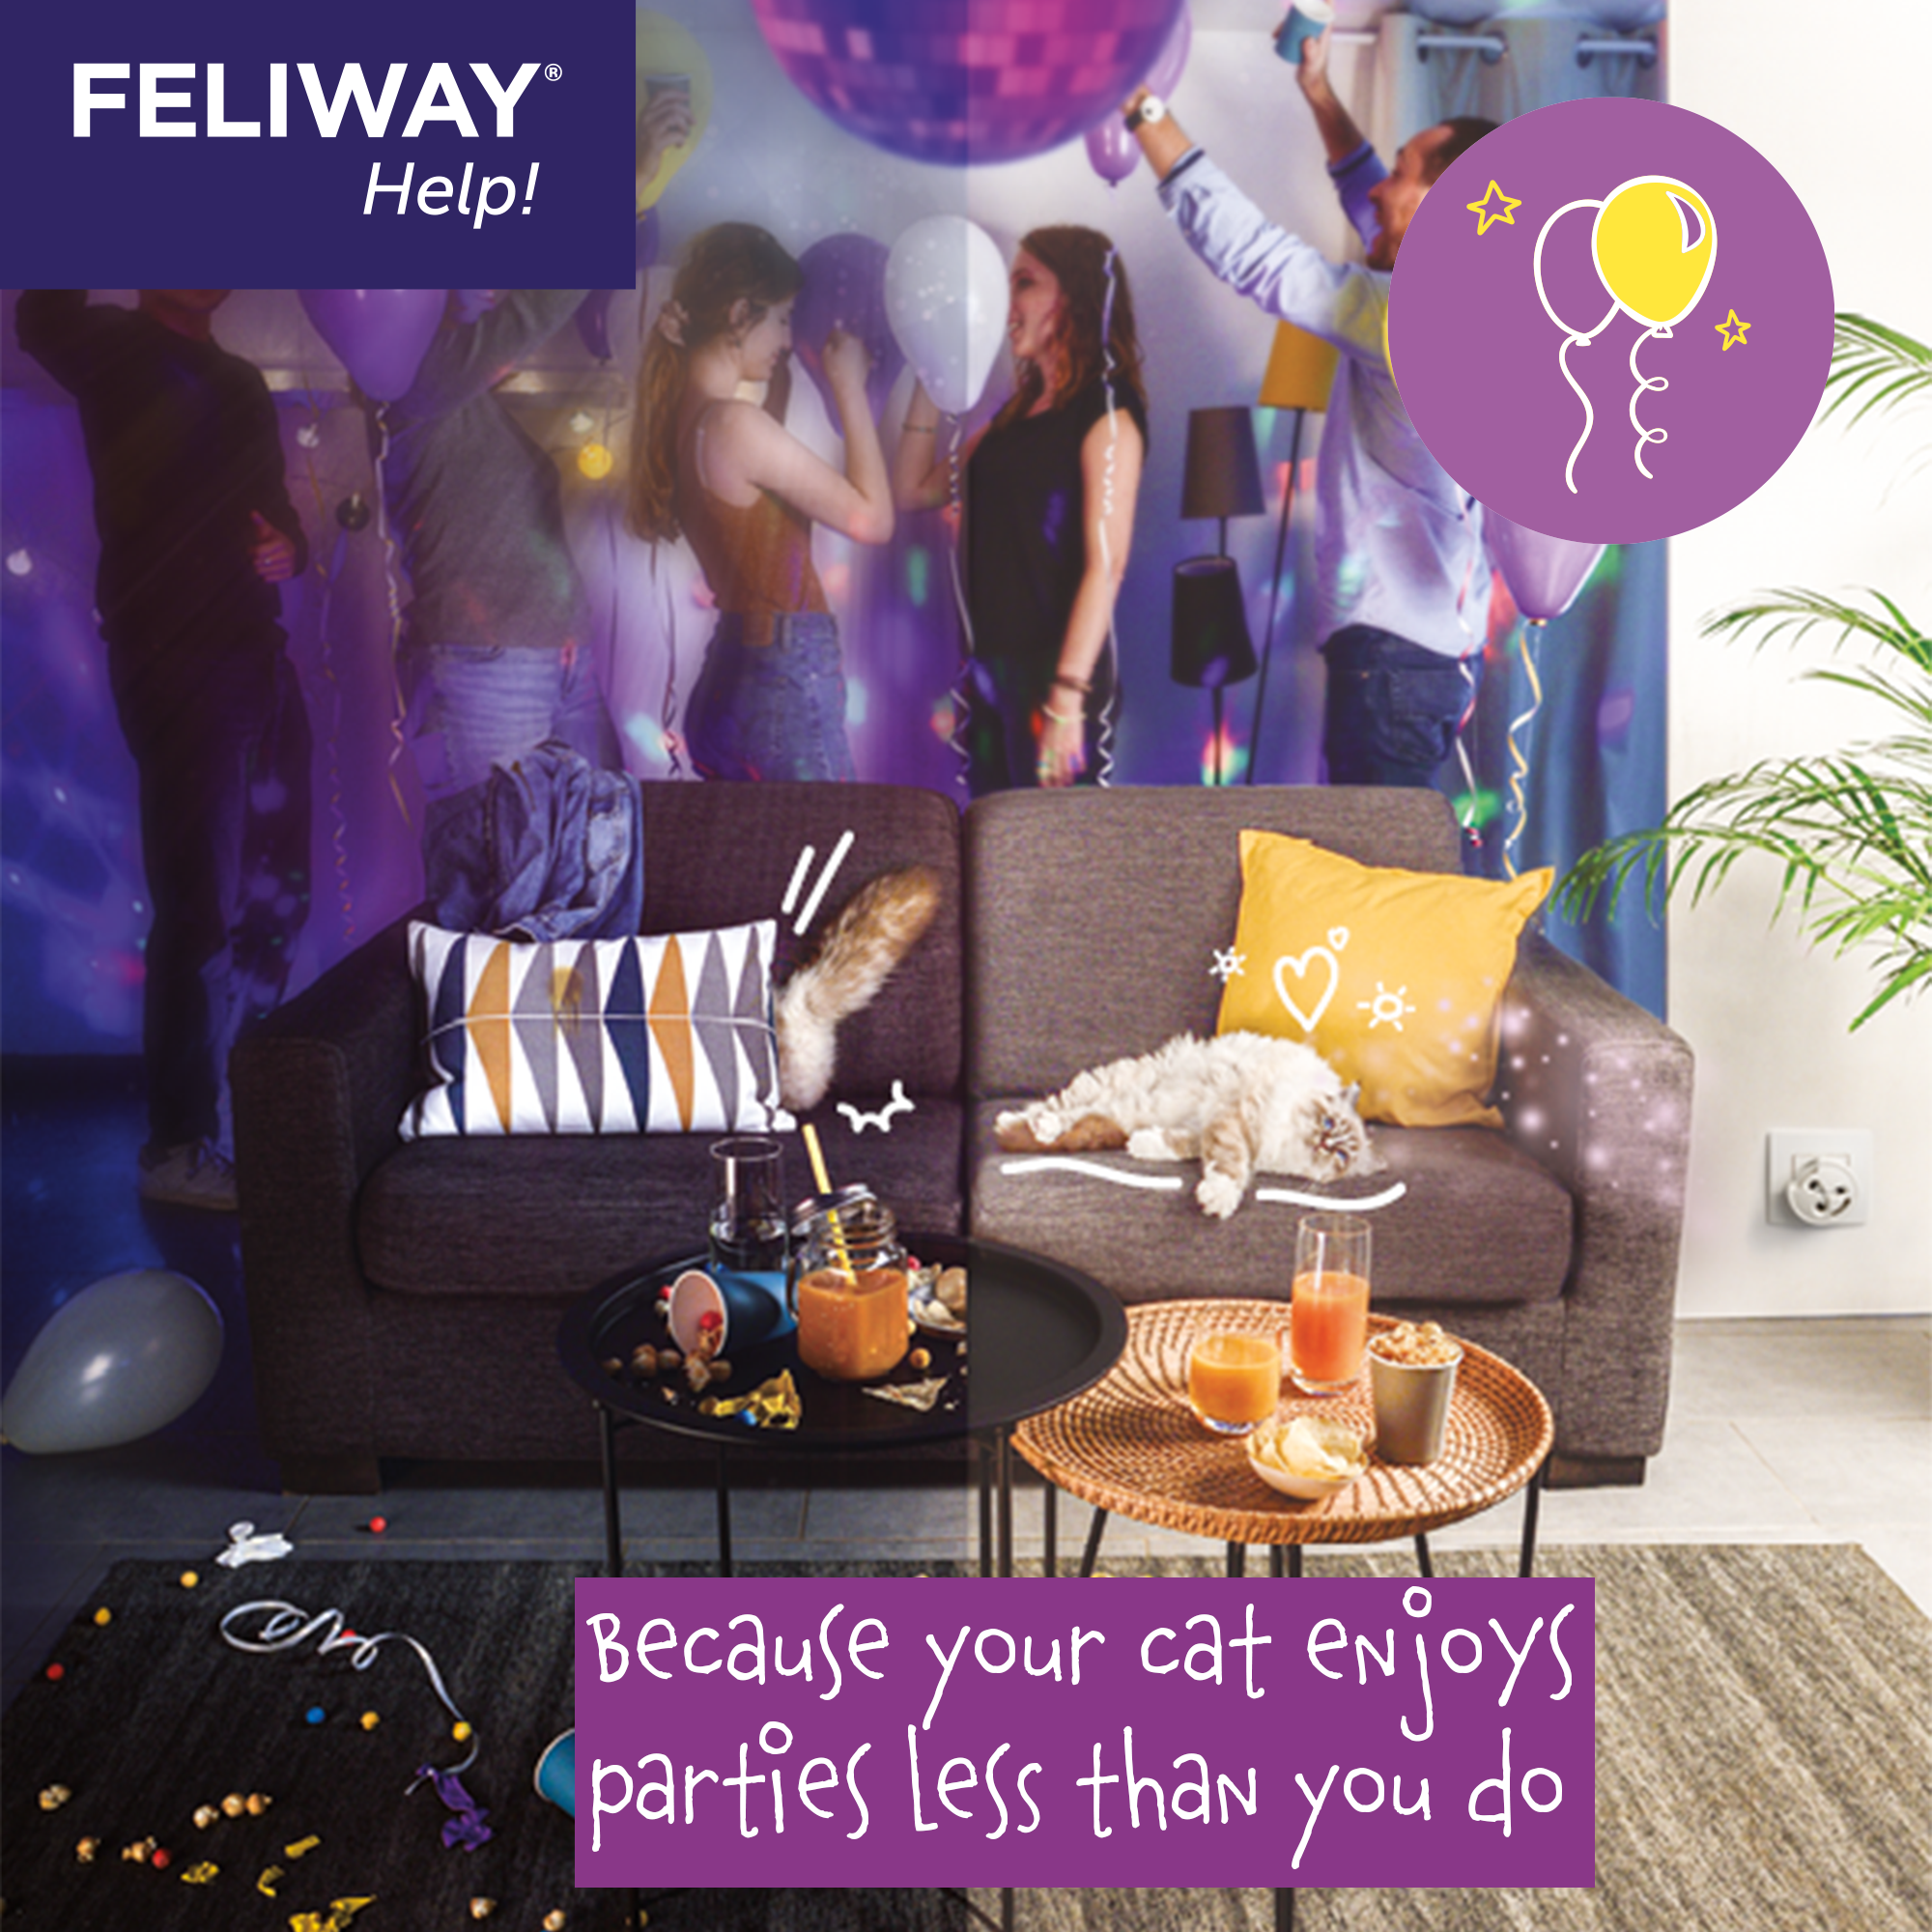 Feliway Friends Refill - Wangford Vet Clinic Shop